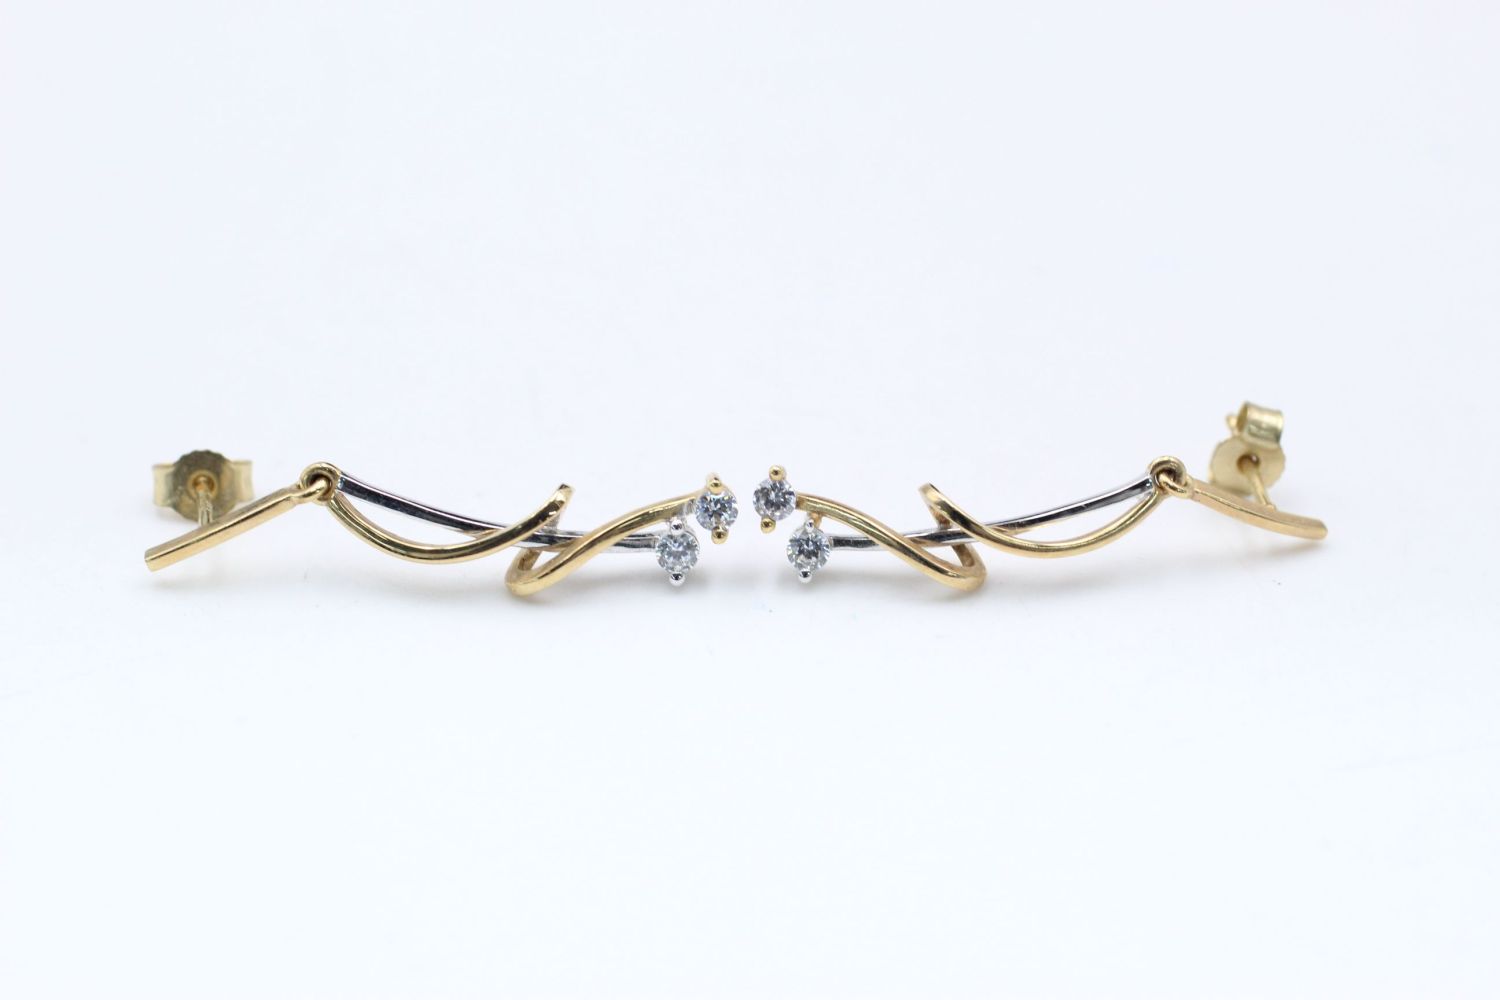 2 x 9ct Gold gemstone stylized drop earrings 4.6 grams gross - Image 5 of 7